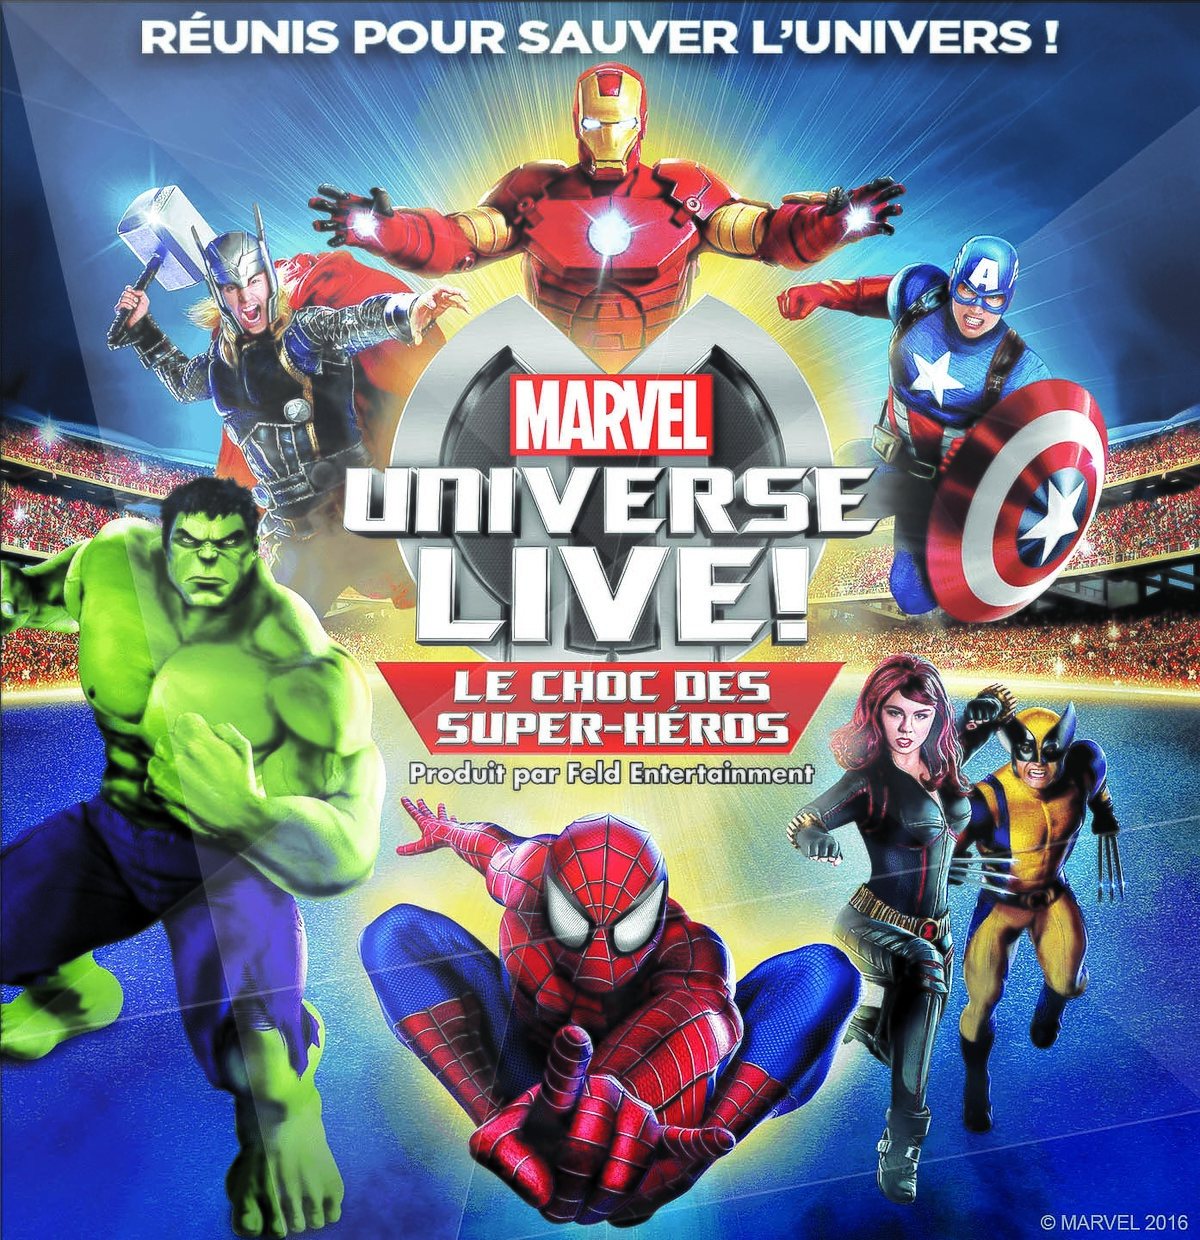 Marvel Universe Live-accord hotel arena